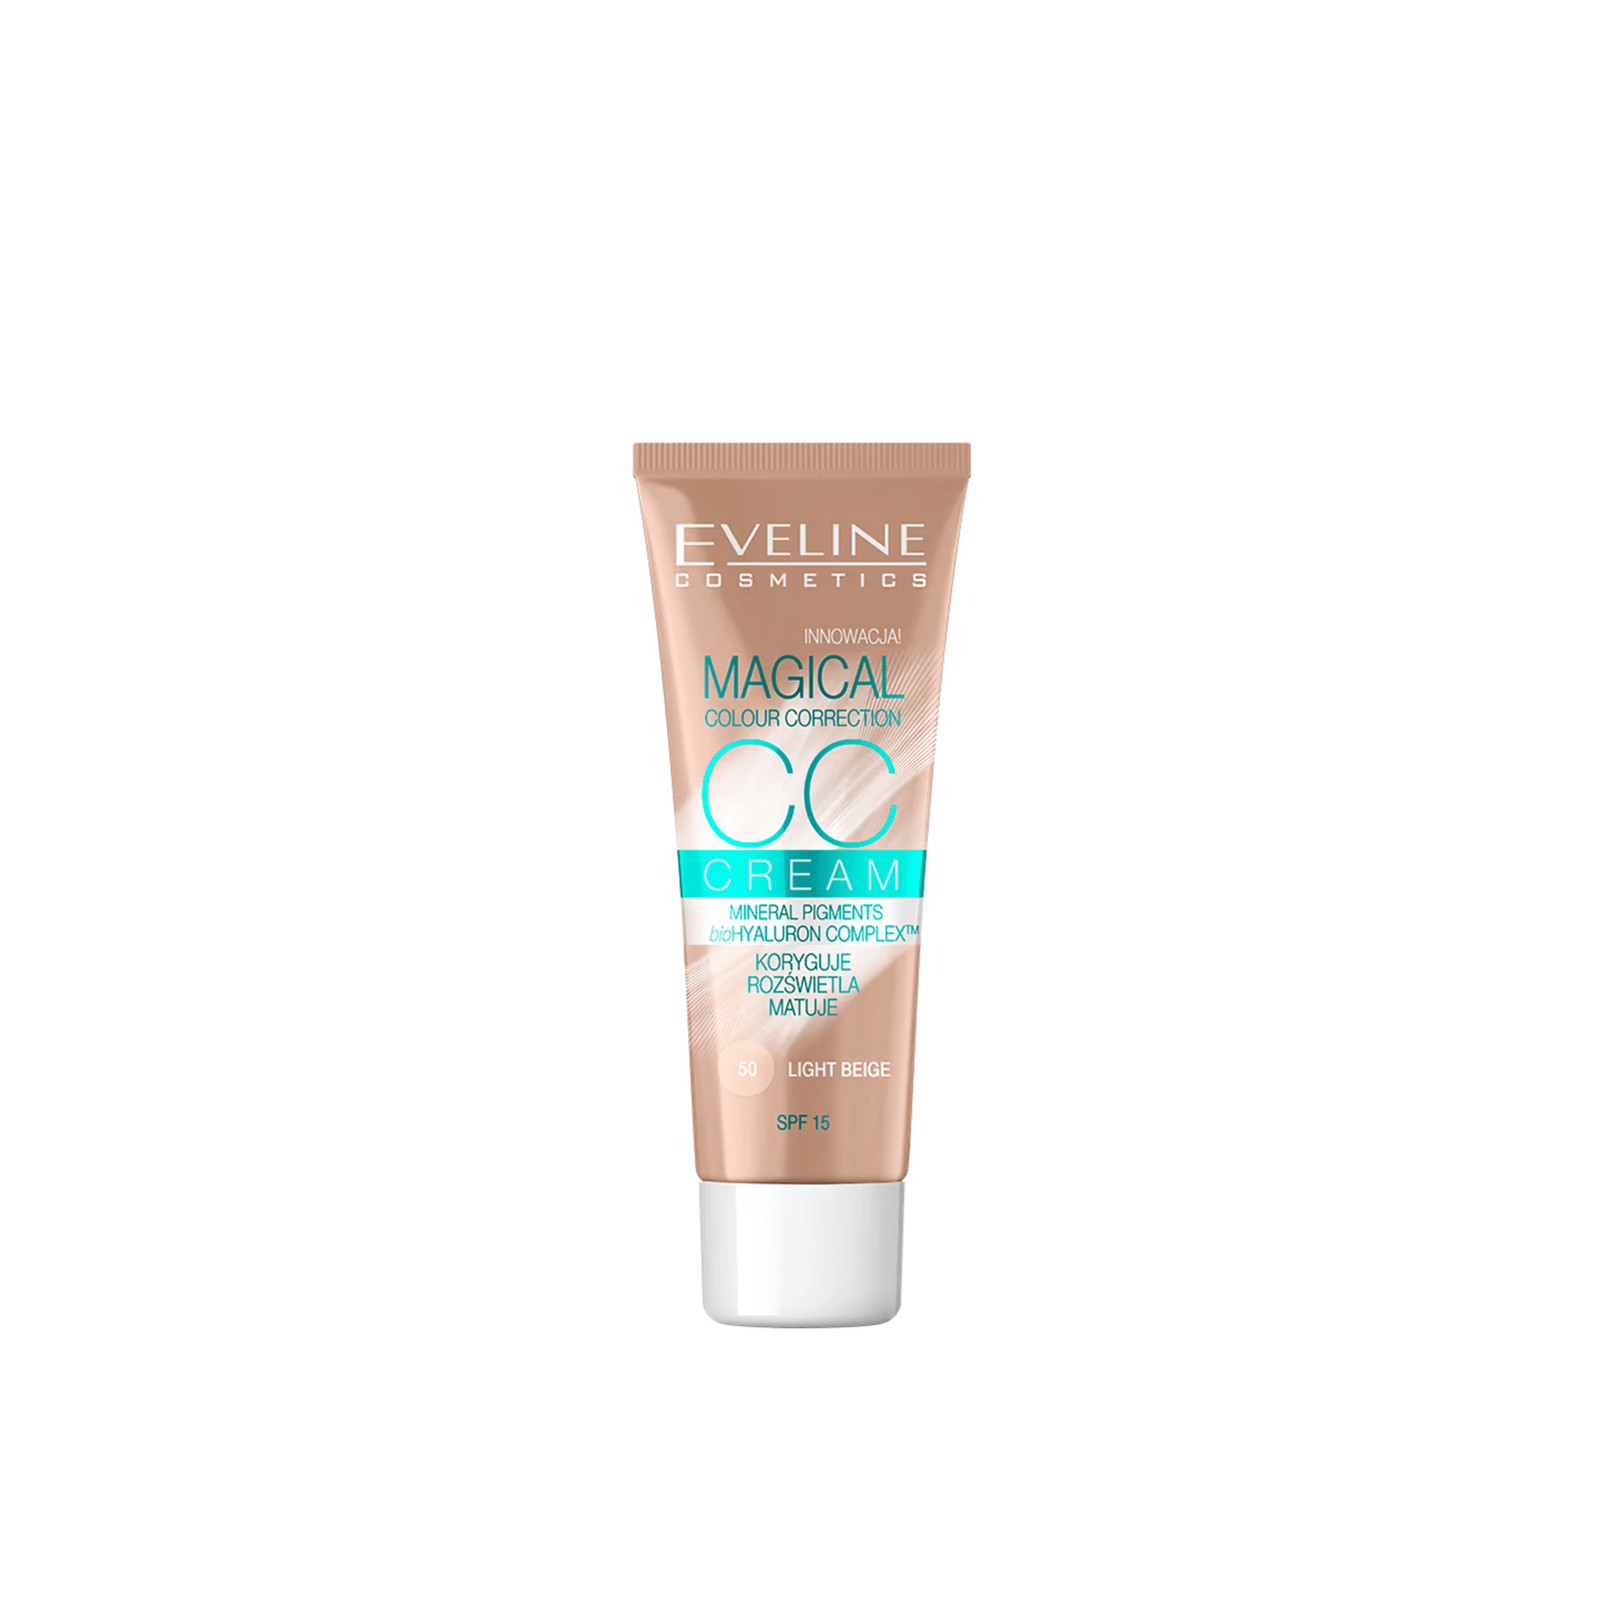 Eveline Cosmetics Magical Colour Correction CC Cream SPF15 50 Light Beige 30ml (1.06 fl oz)